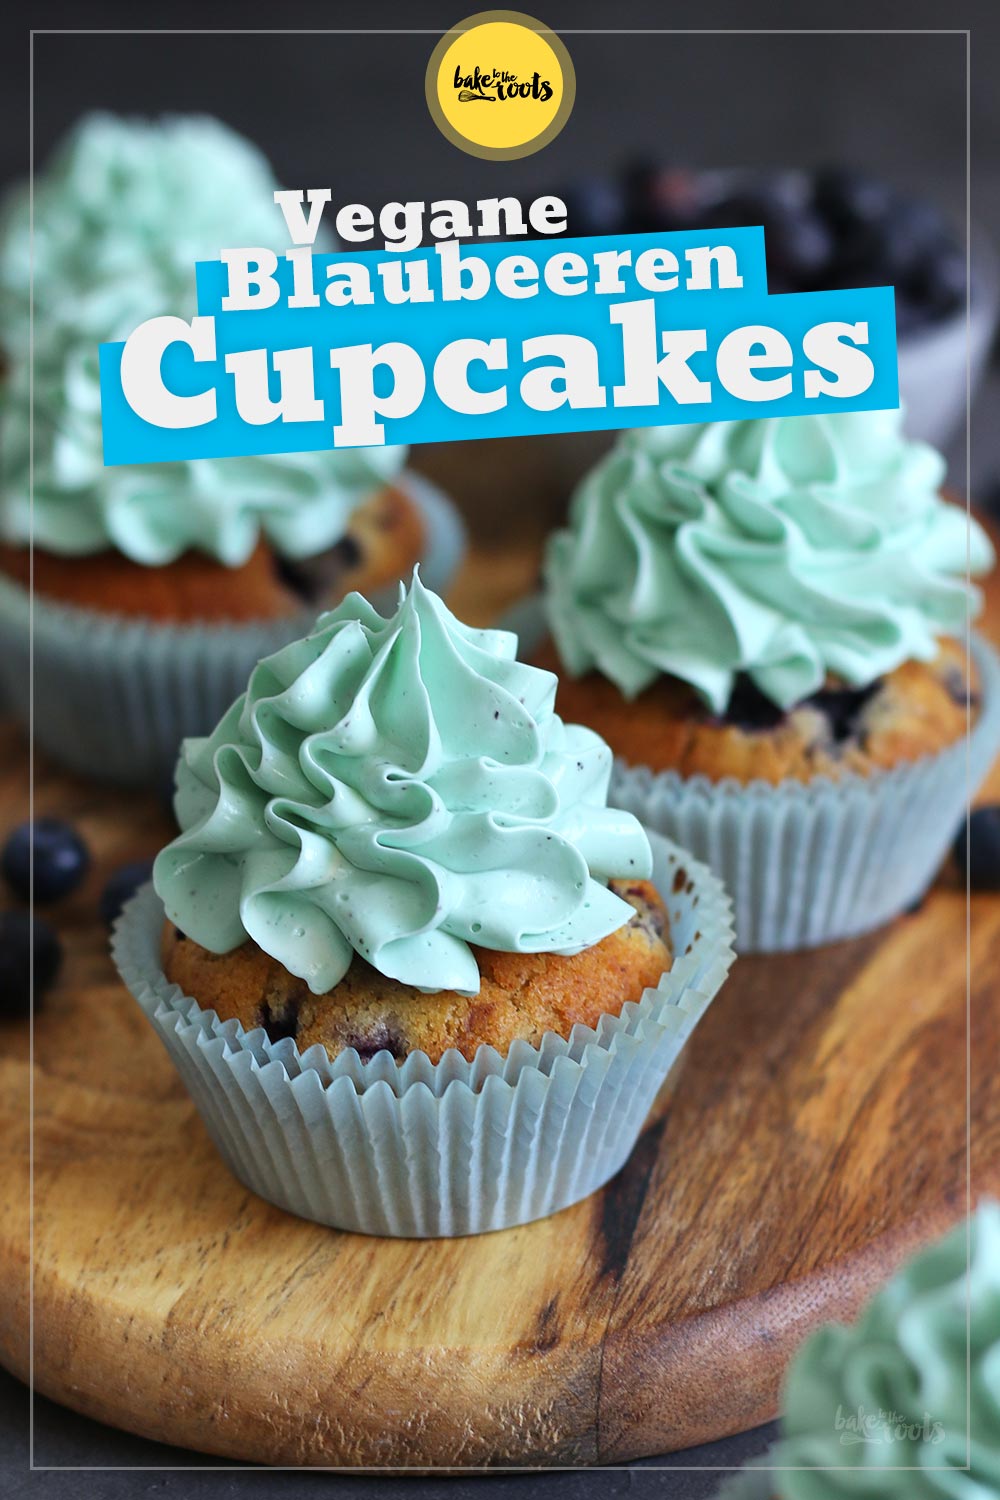 Vegane Blaubeeren Cupcakes | Bake to the roots